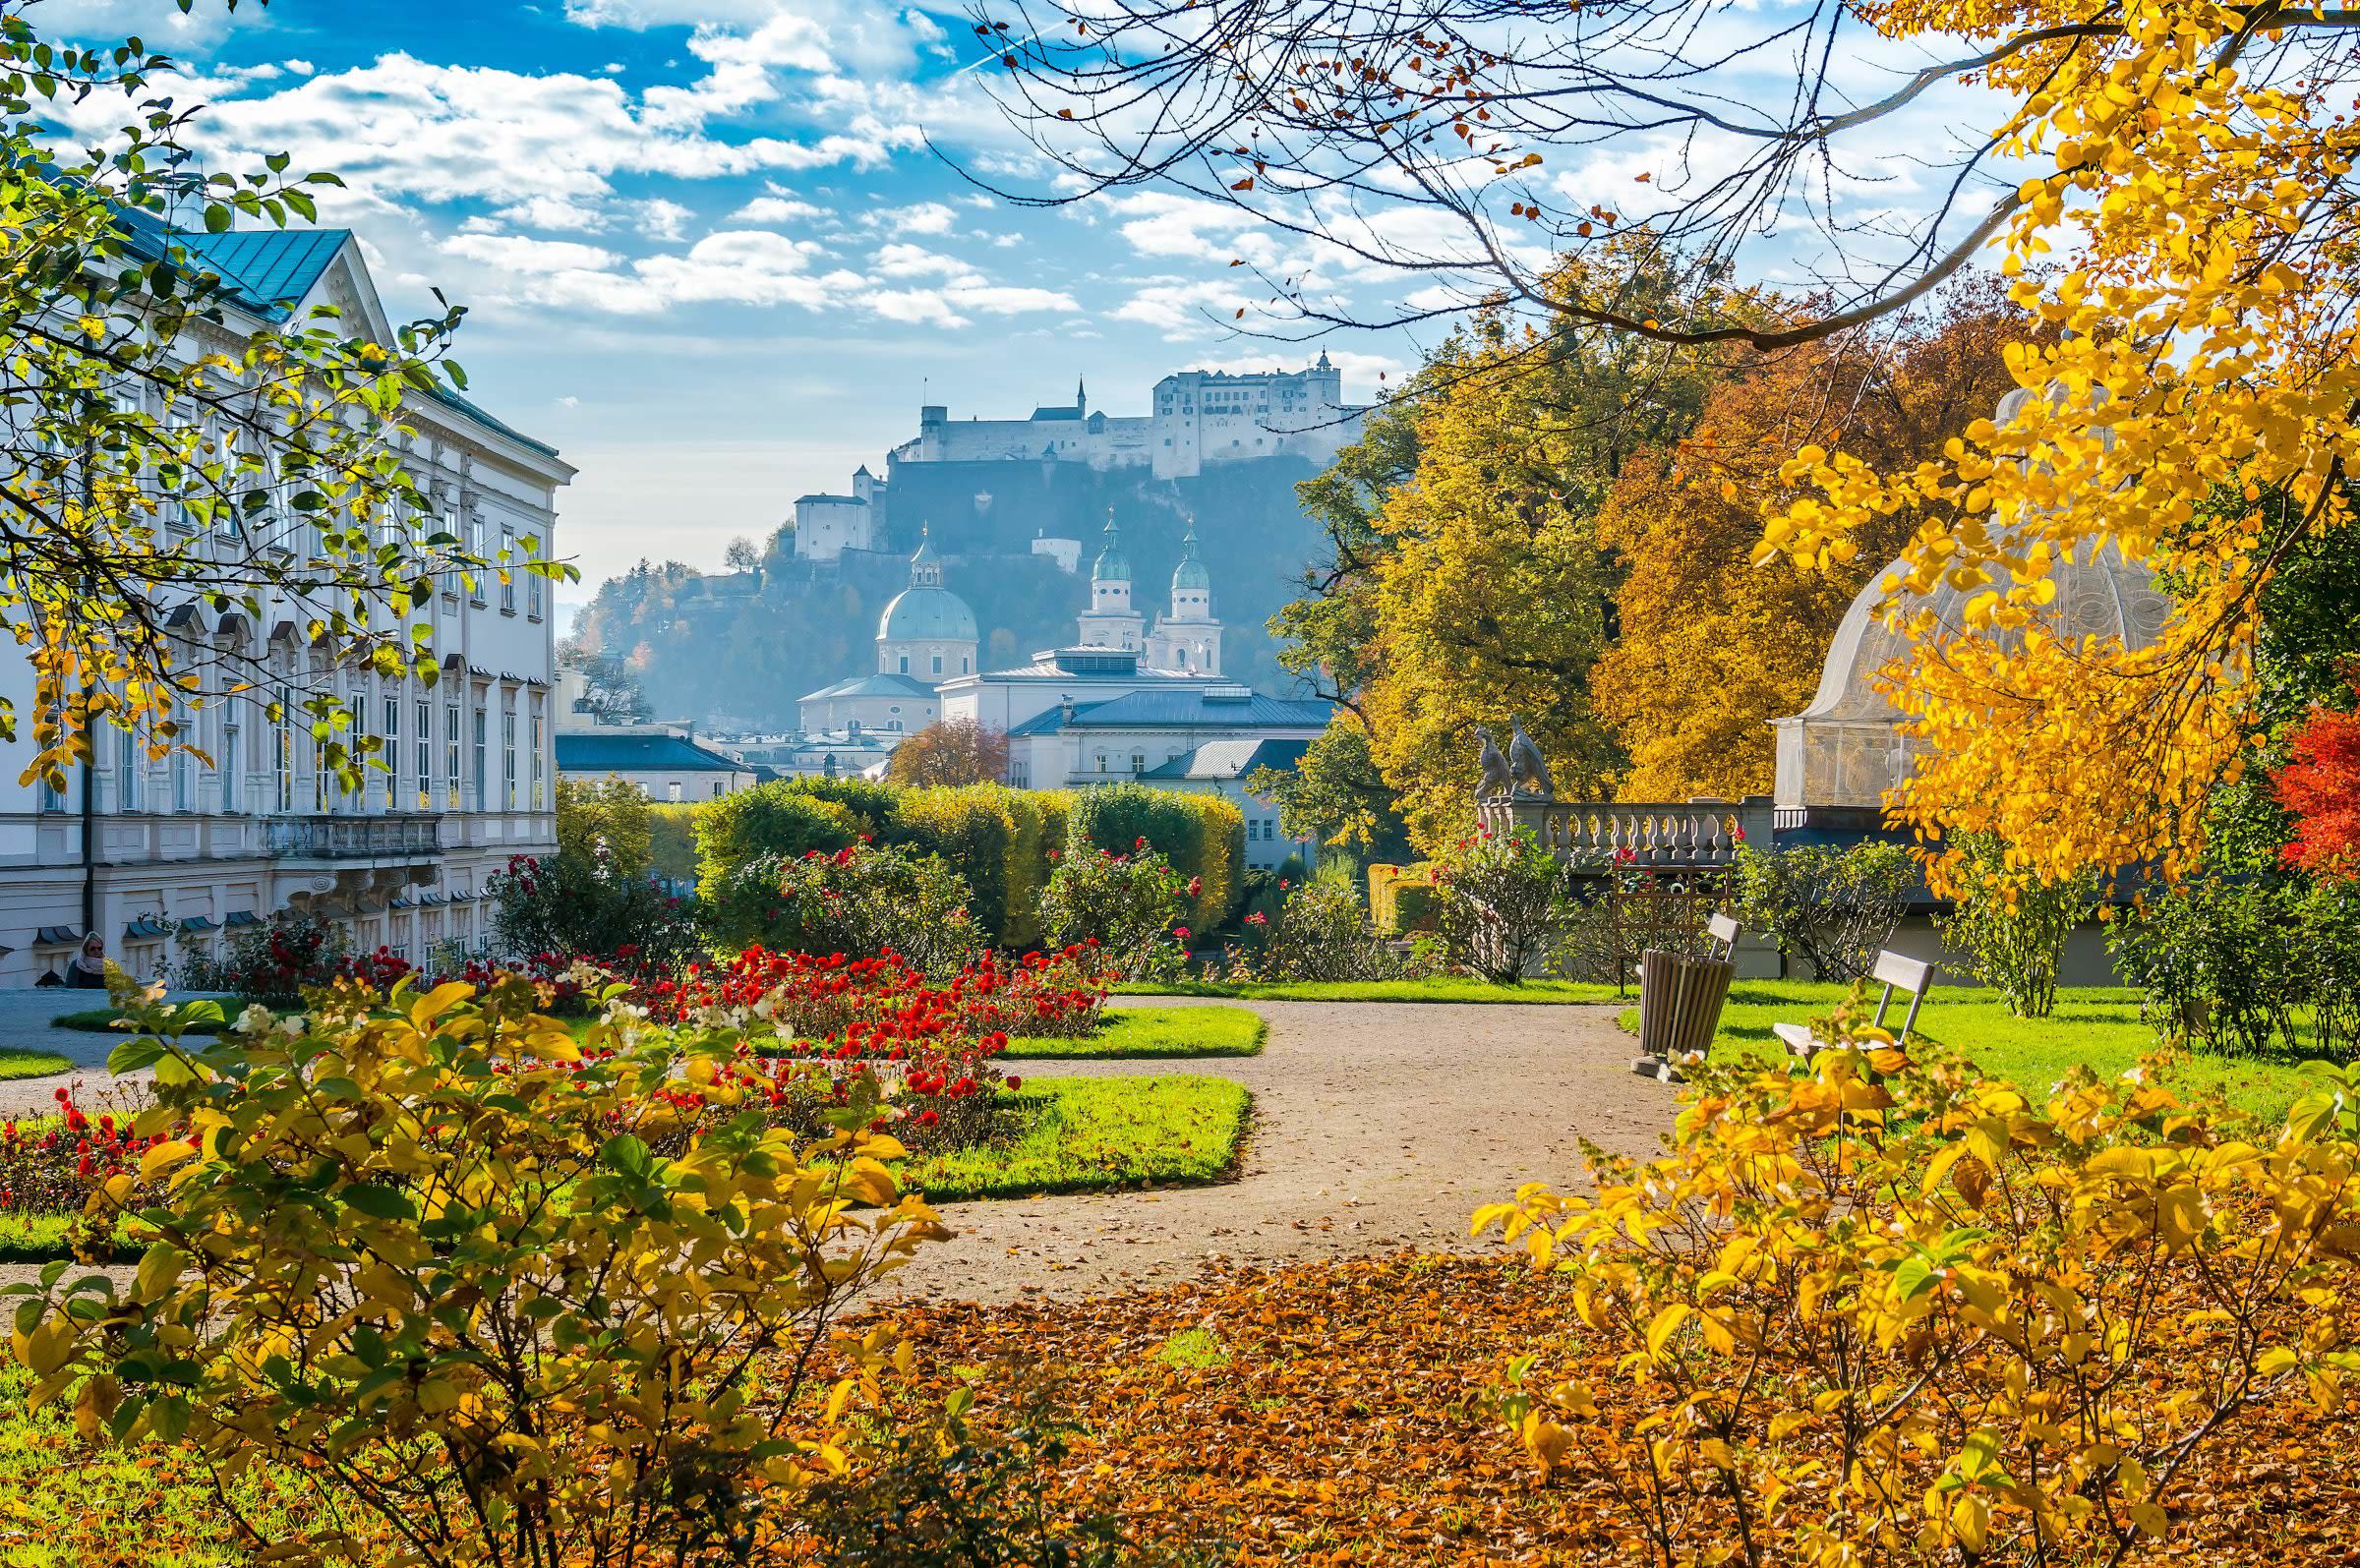 Honeymoon special: Lovely 10 night trip to Prague, Salzburg and Budapest